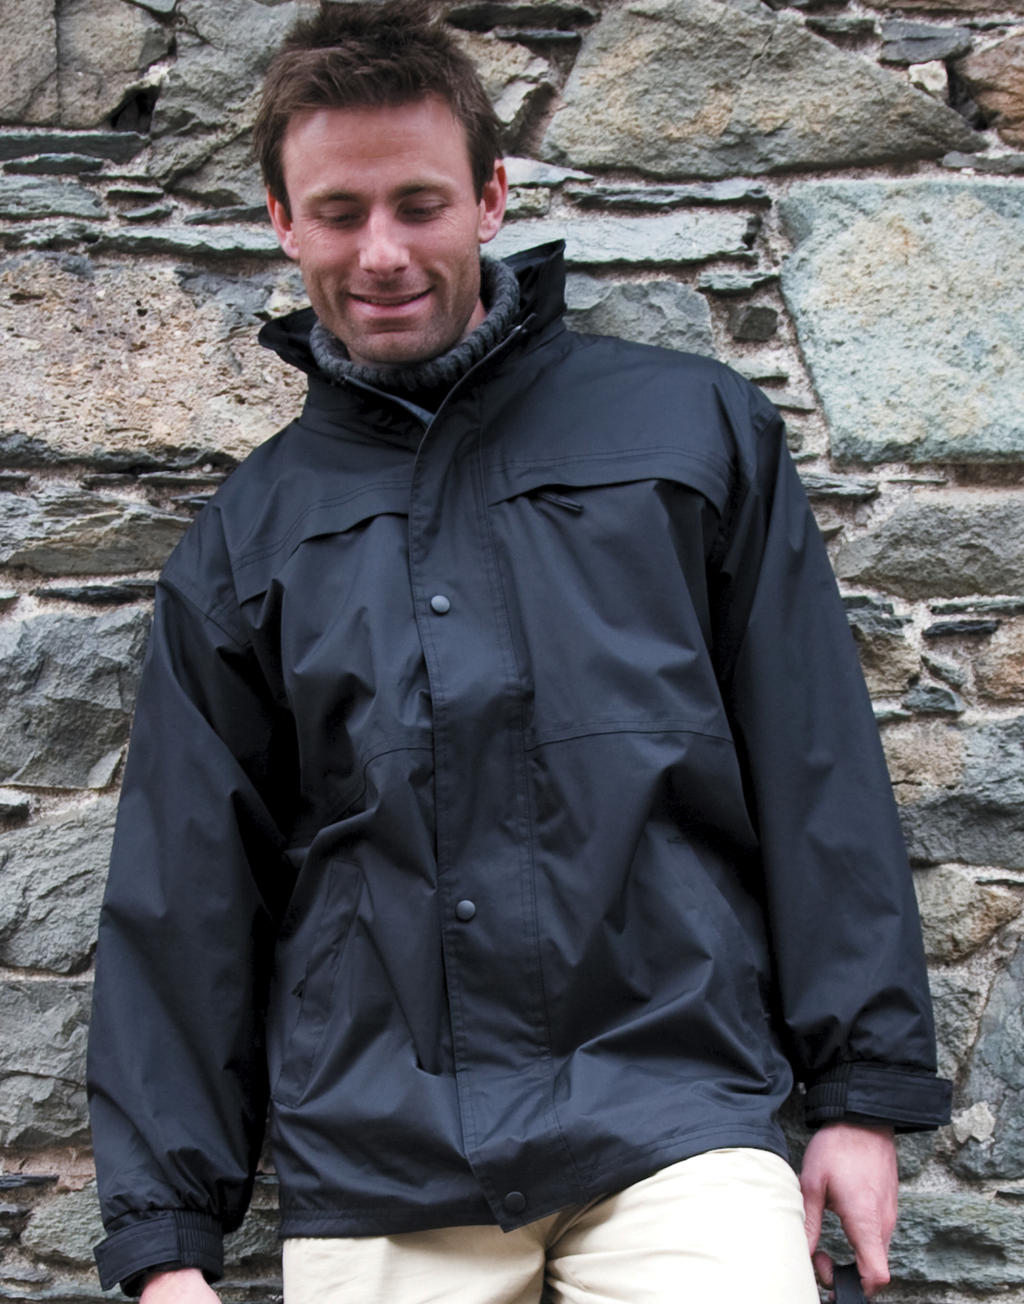  Mid-Season Jacket in Farbe Black/Grey